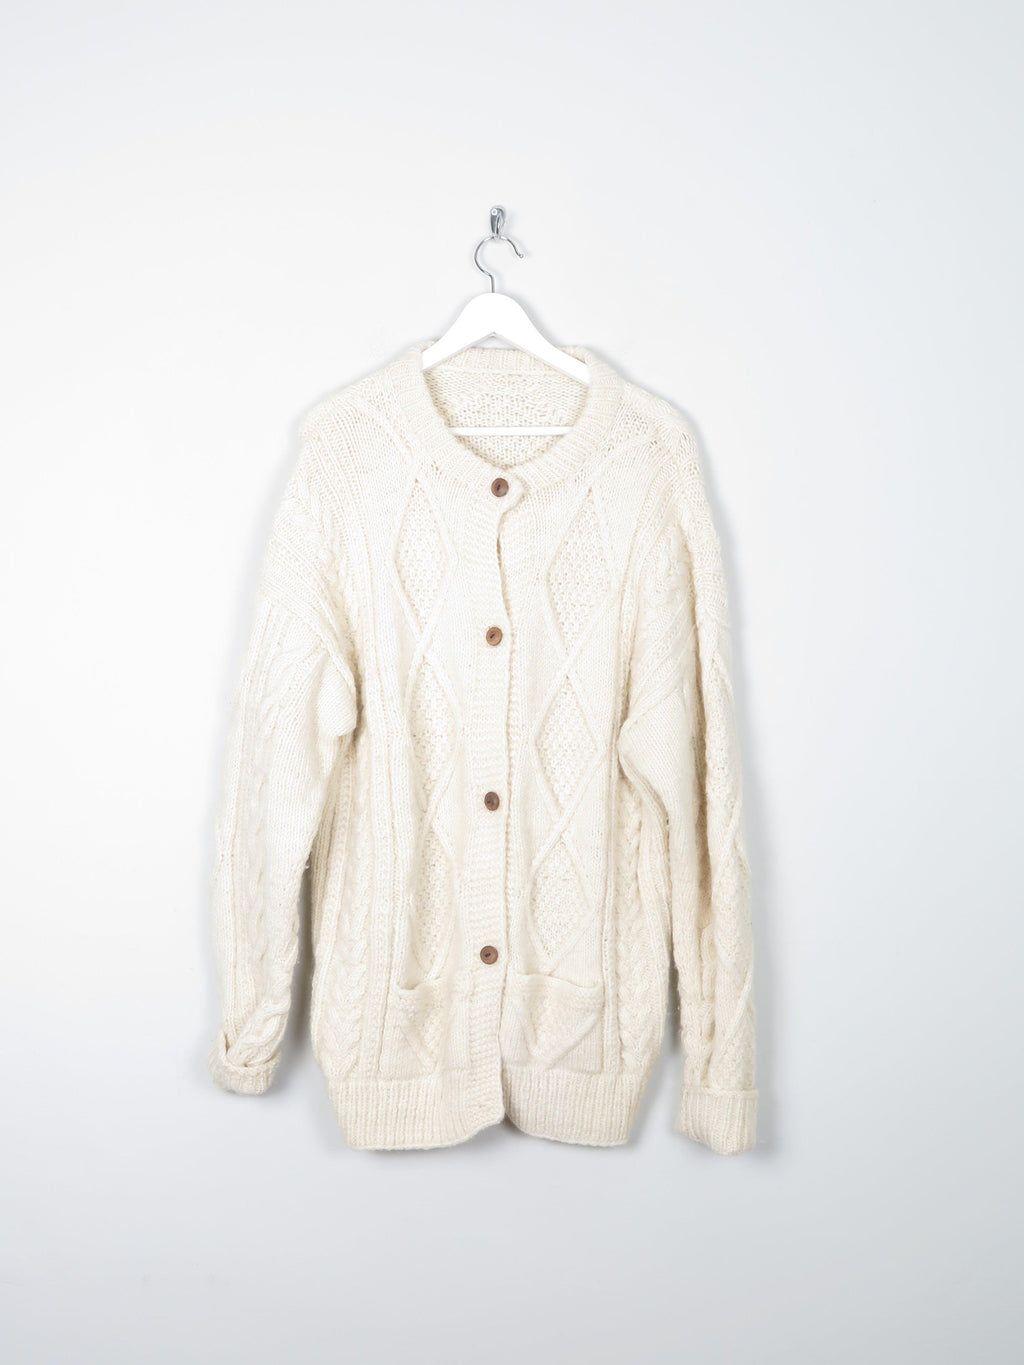 Men’s Hand-knit Vintage Aran Cardigan XL - The Harlequin